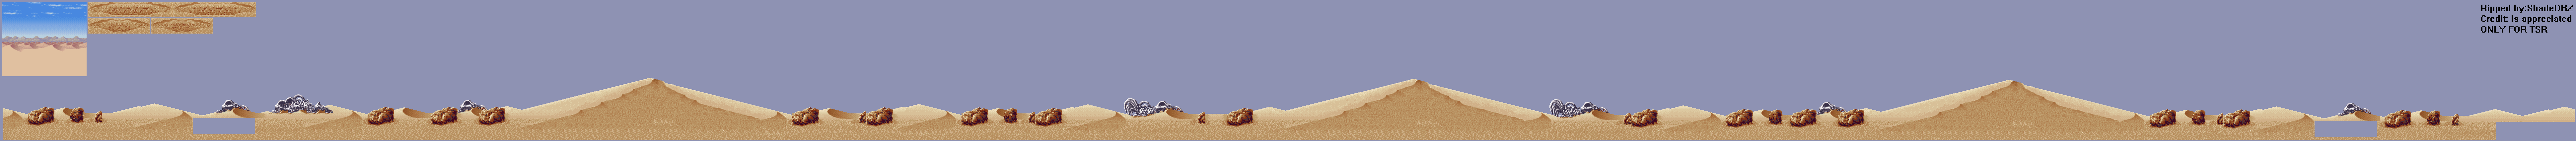 Level 01 - Dune Sea